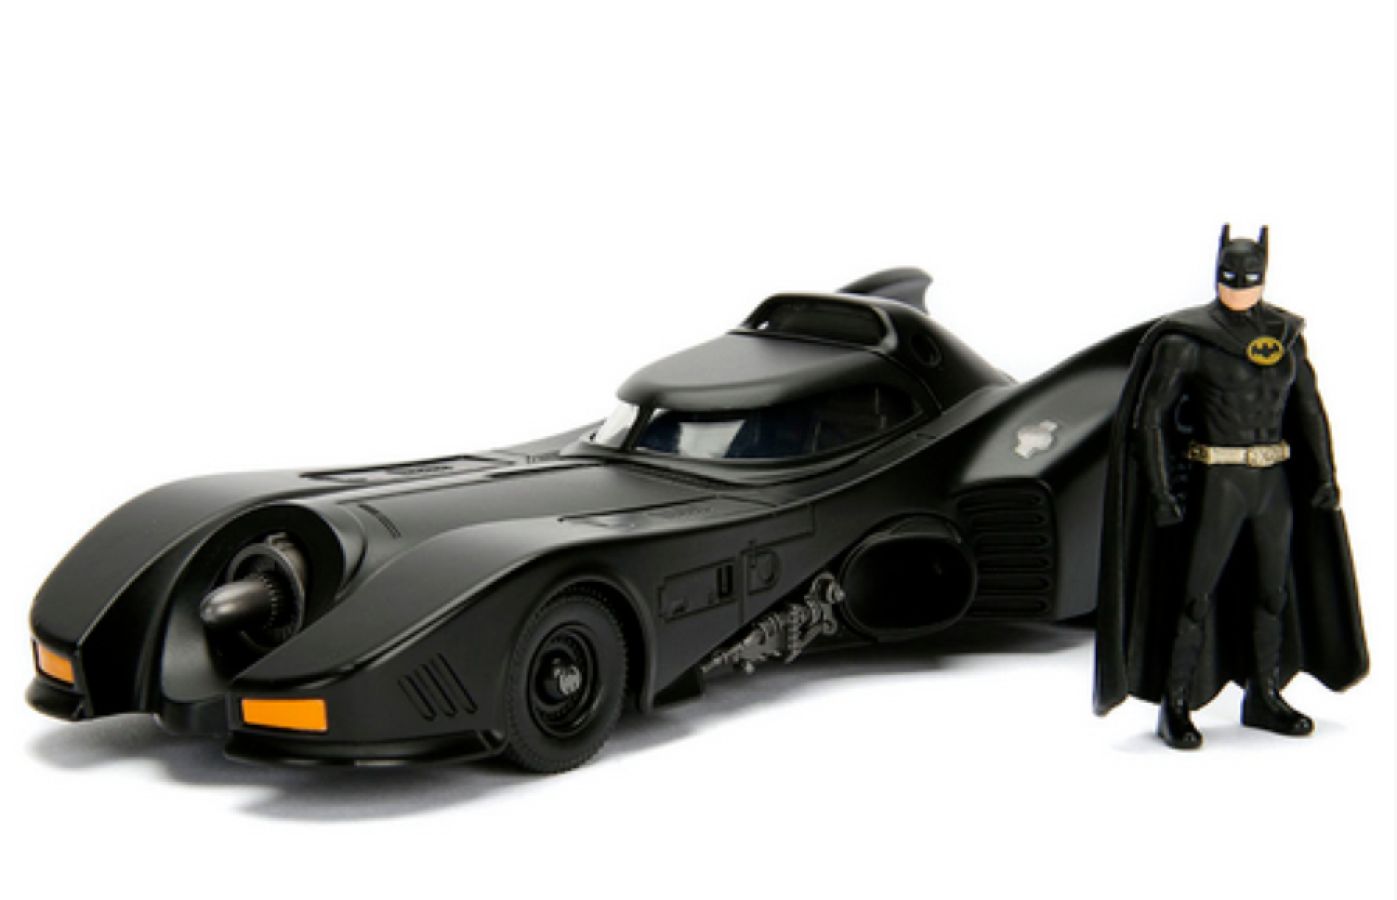 Batman (1989) - Batmobile with Batman 1:24 Scale Diecast Model Kit